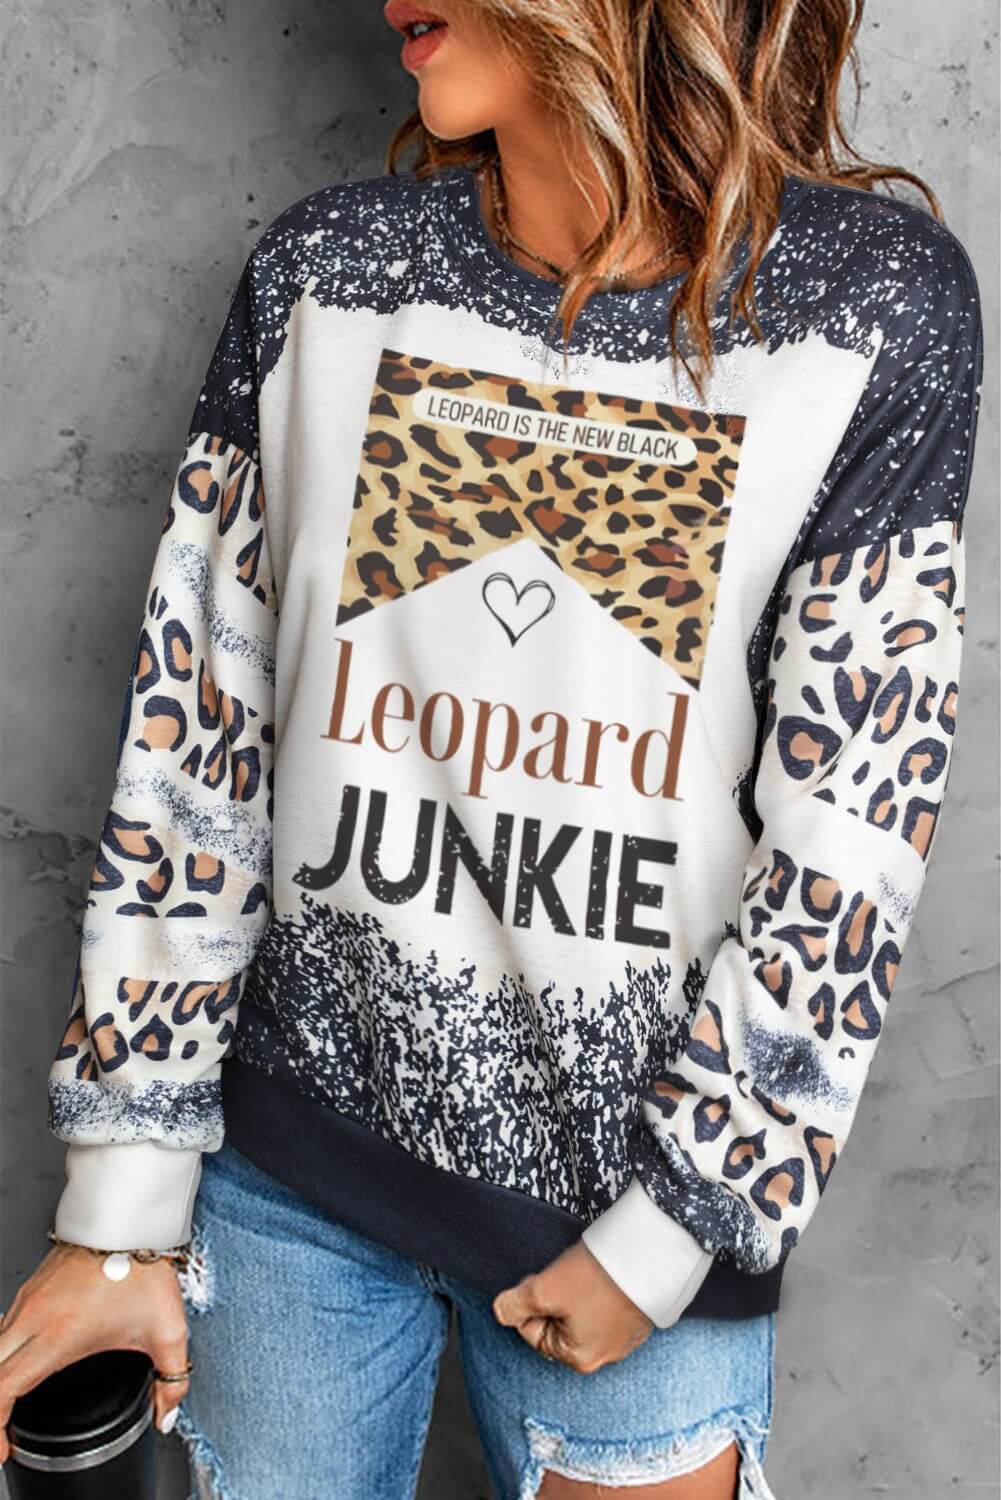 Leopard Print Junkie Sweatshirt Top